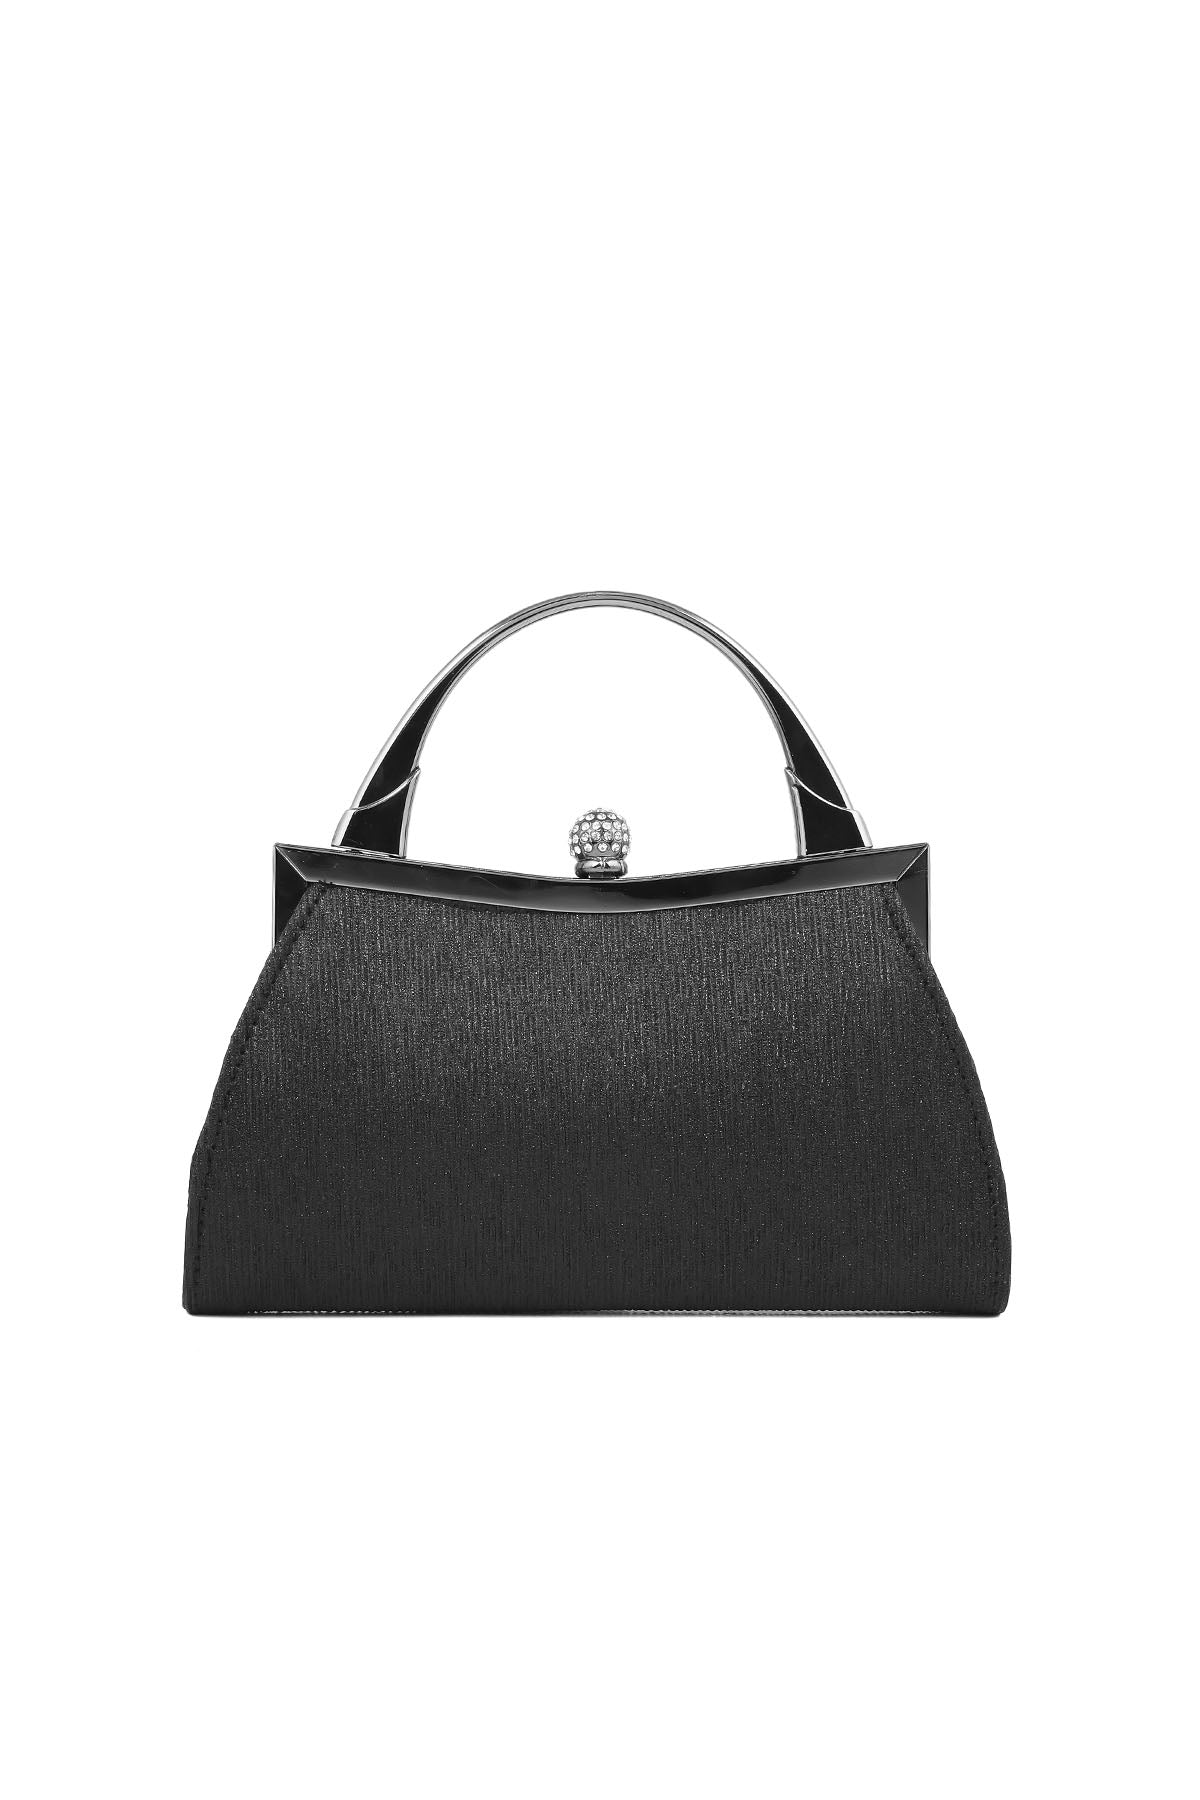 Top Handle Hand Bags B21600-Black